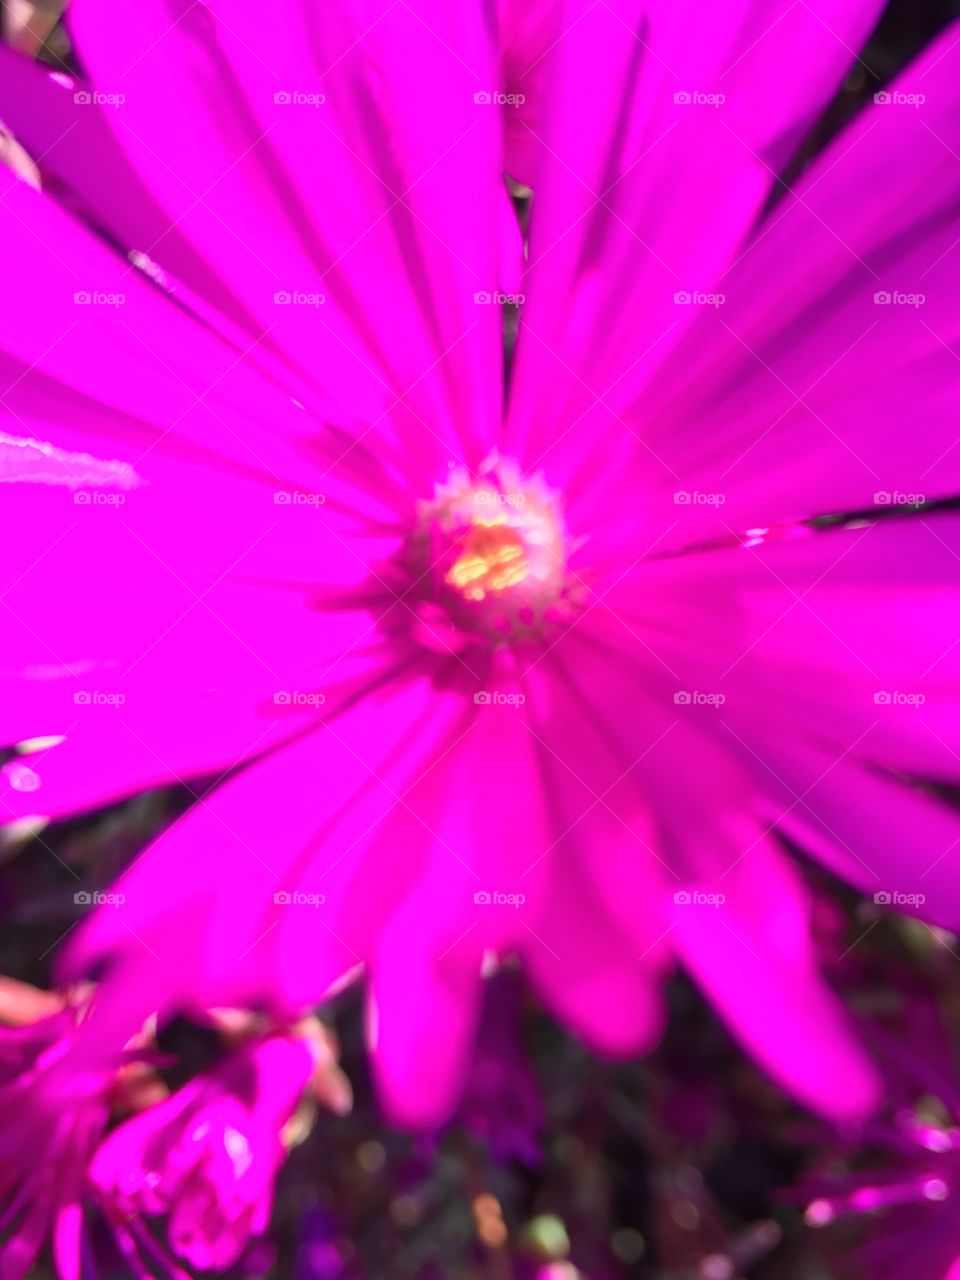 Very bright pink daisy